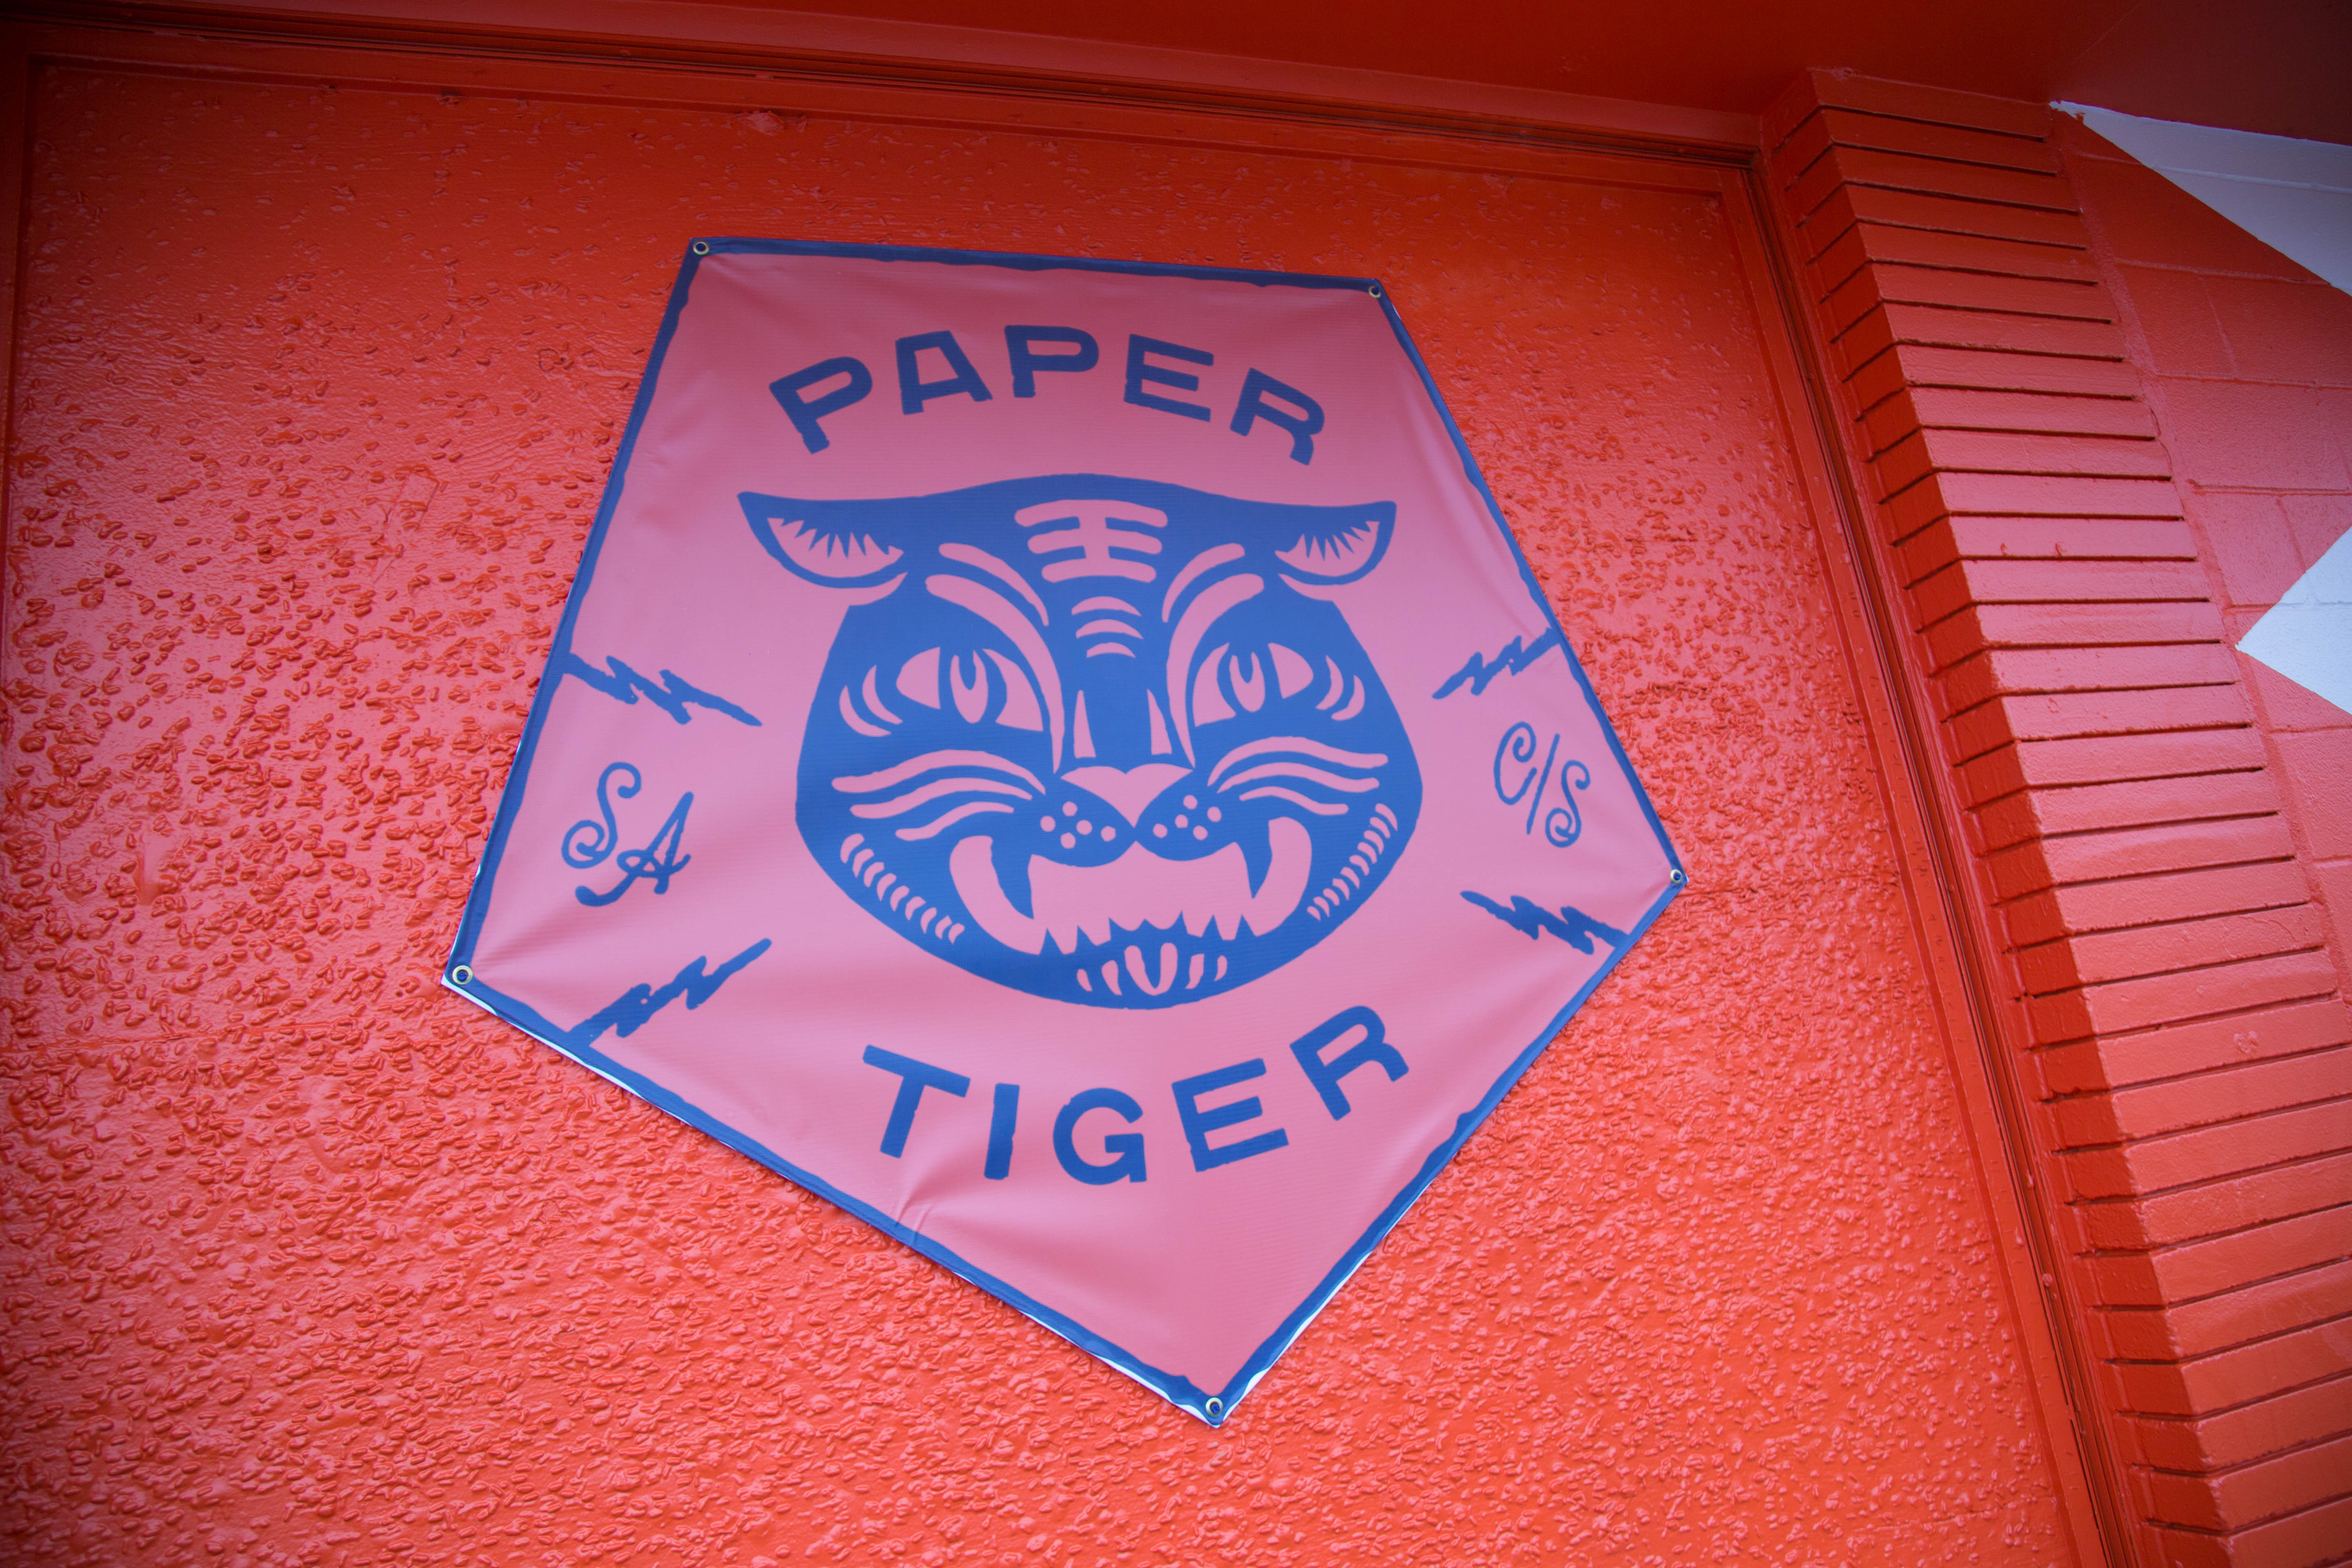 Paper Tiger’s new digs feature a papel picado banner. - LINDA ROMERO